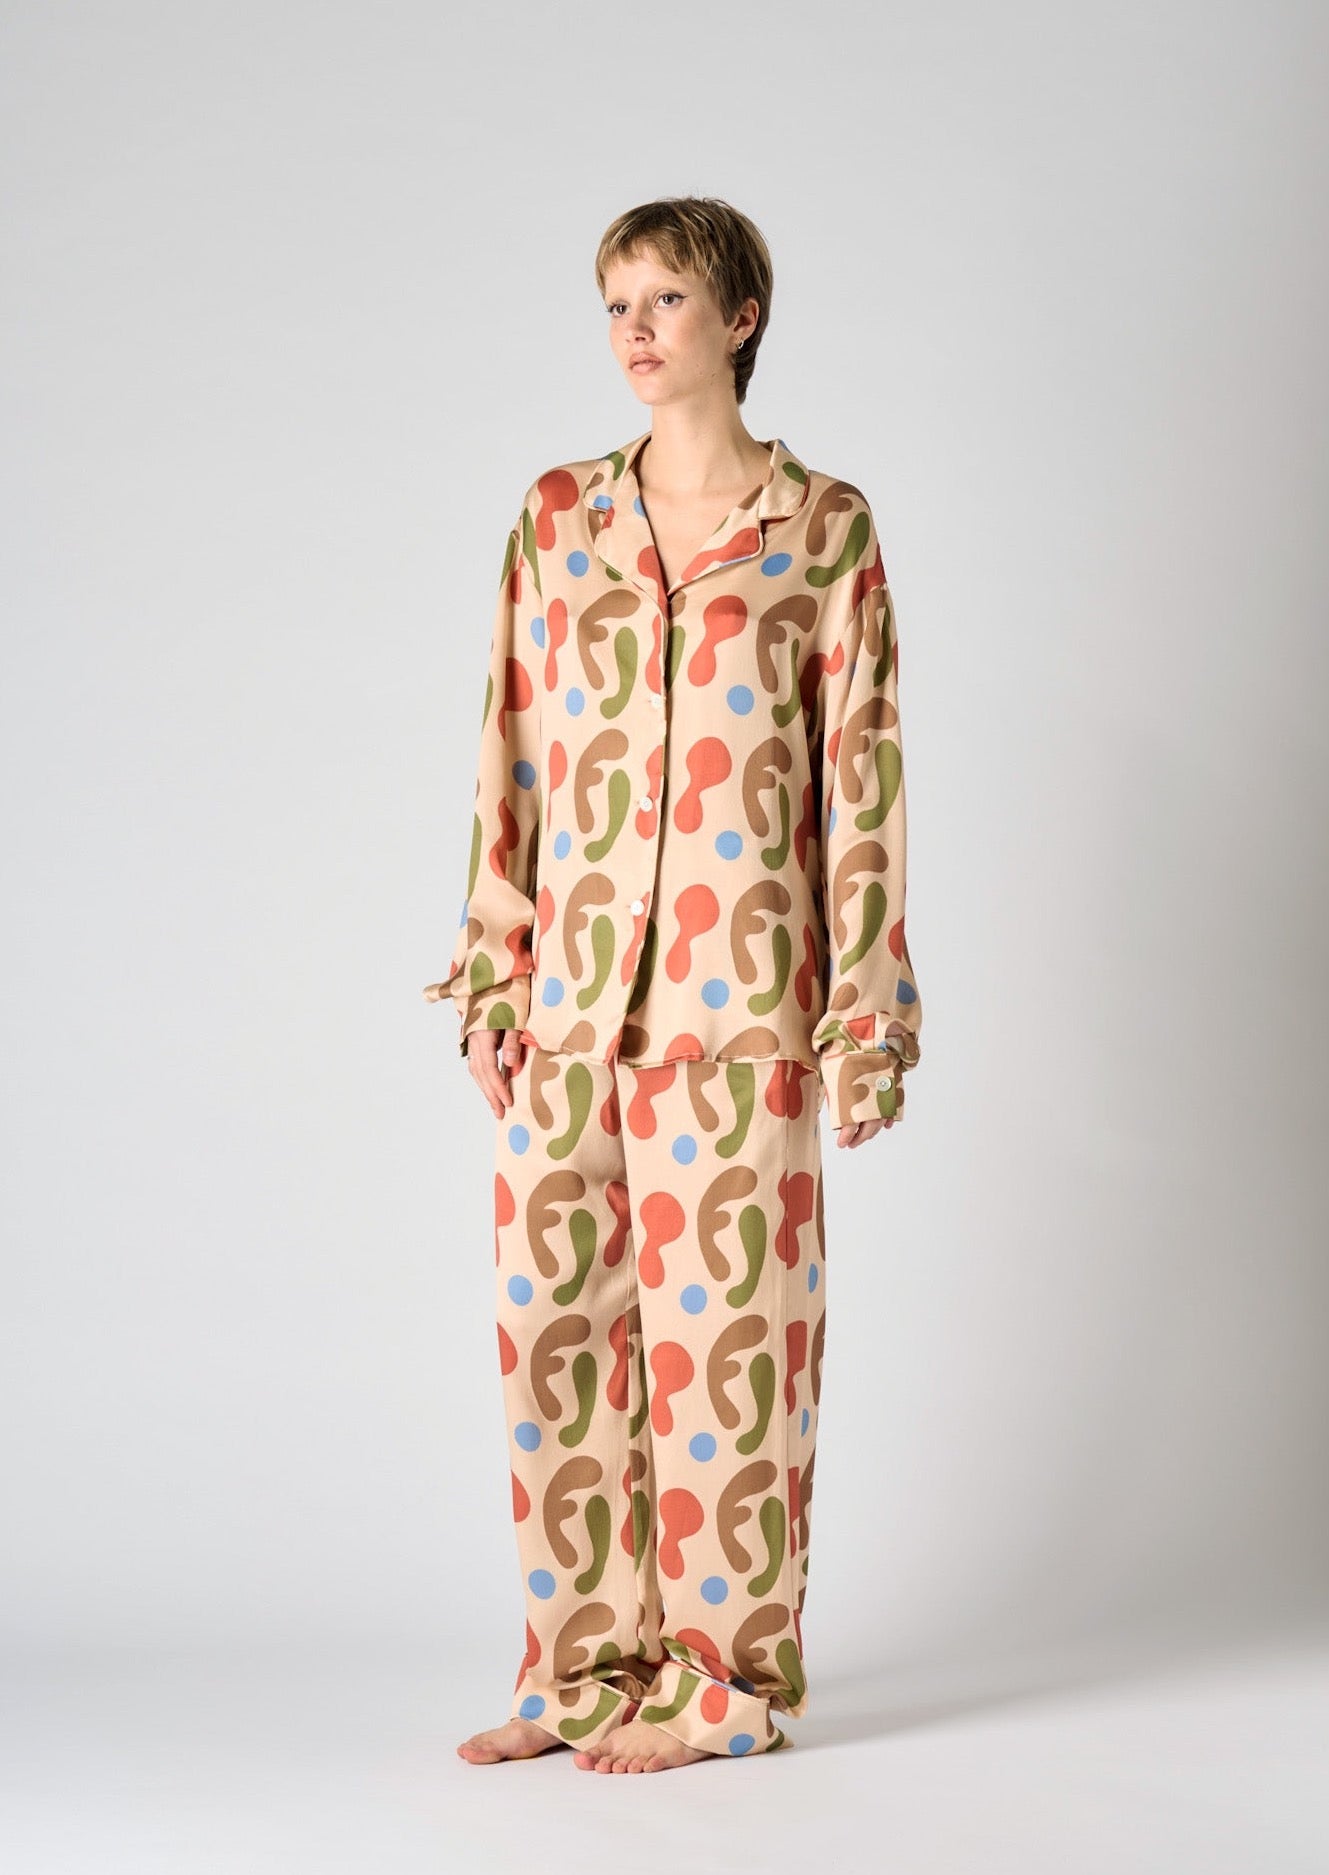 Silk Pyjama Set - yilou - silk pyjamas - printed - red - green - blue - sustainable - top - bottom - made in France -printed silk pyjamas- abstract print- silk pyjamas-yilou - yilou silk pyjamas